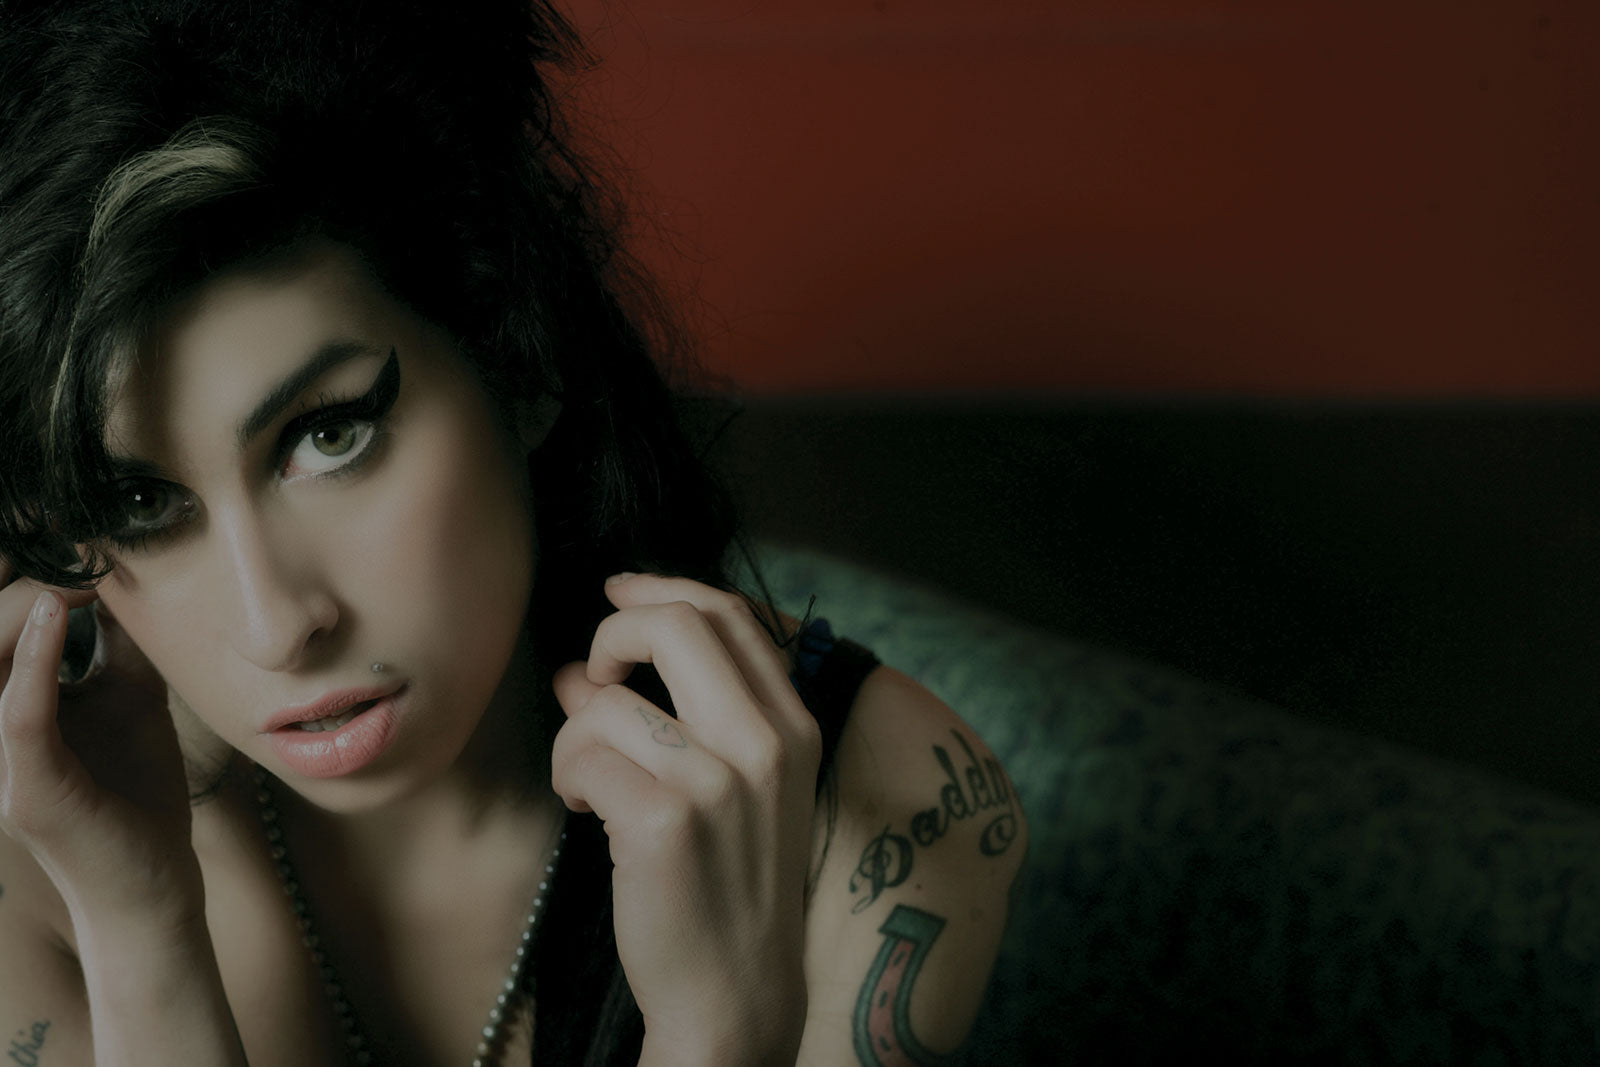 Amy Winehouse – Am I Not Your Girl? (Coloured Vinyl) LP Vinyl - Rock Vinyl  Revival